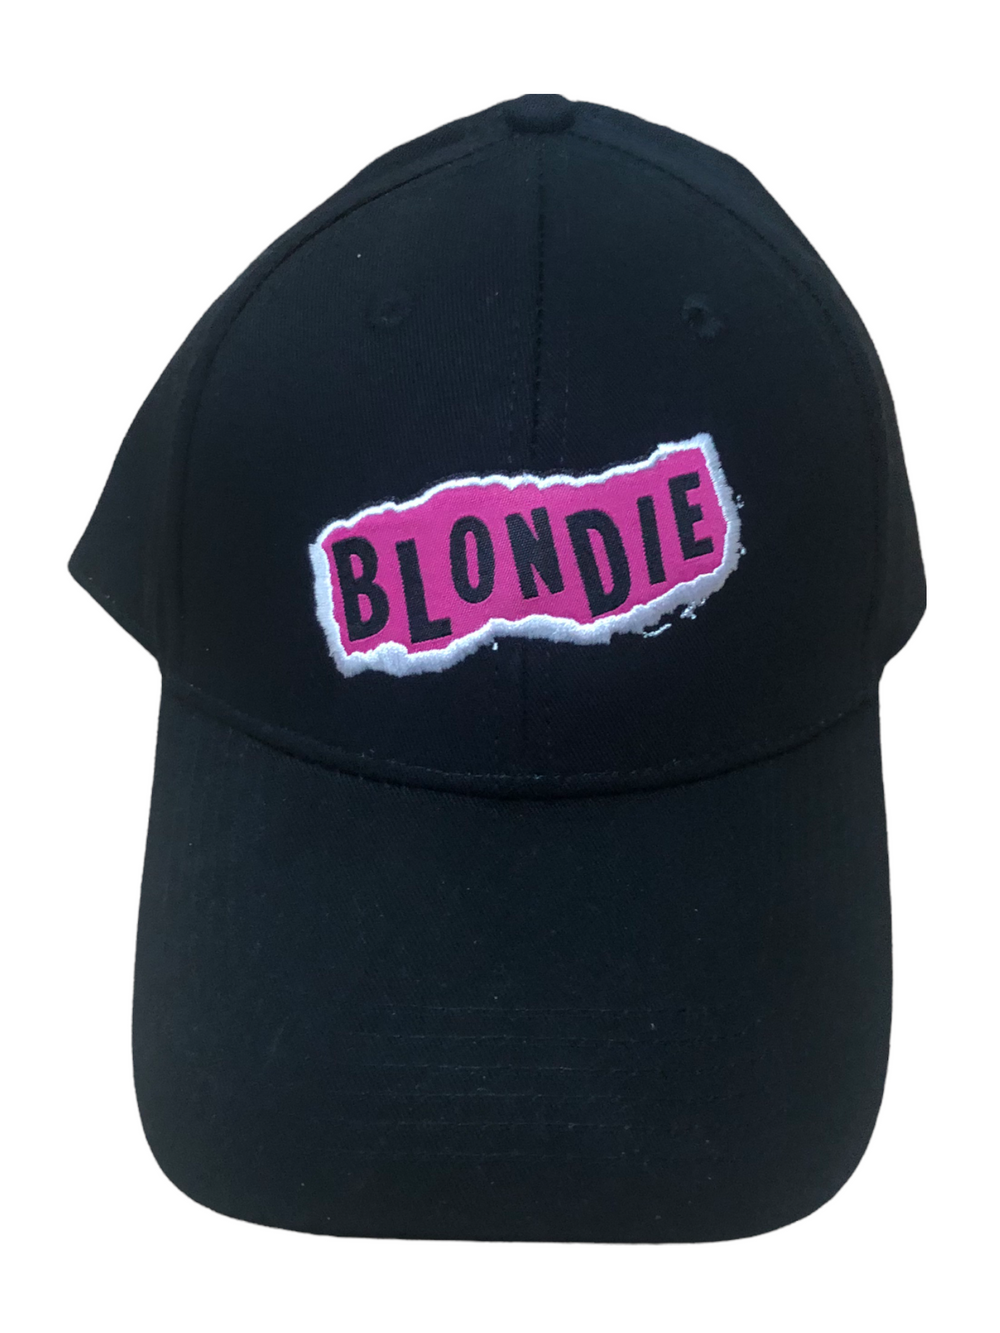 Blondie Punk Logo Official Embroidered Peak Cap Adjustable